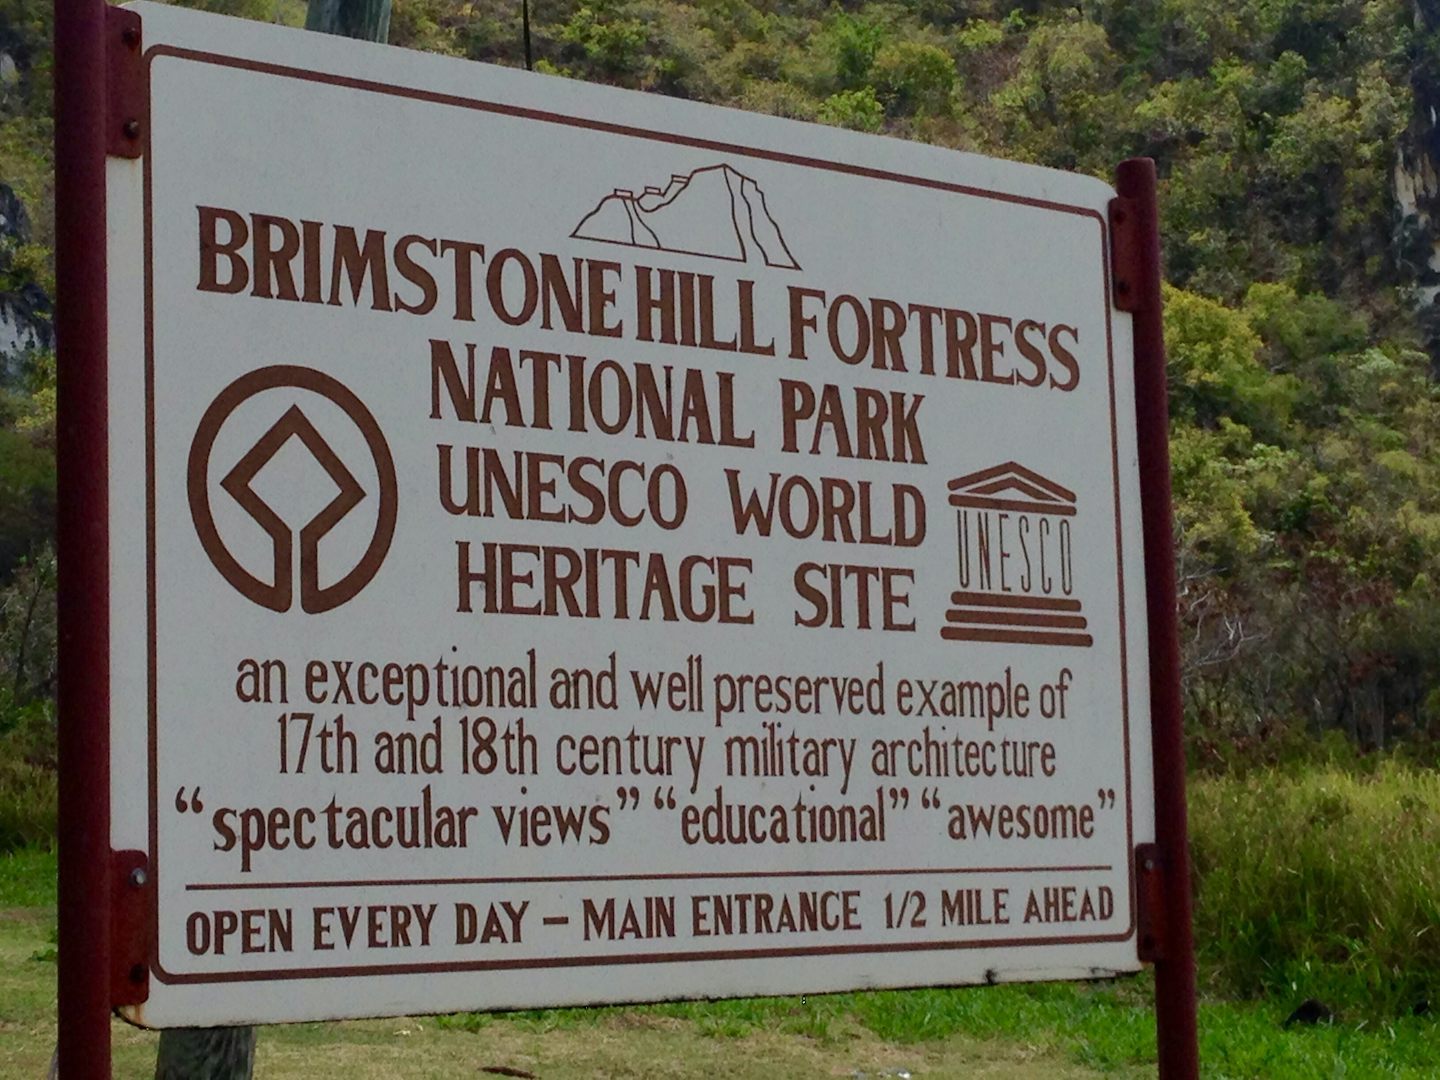 Brimstone Hill Fortresson St. Kitts